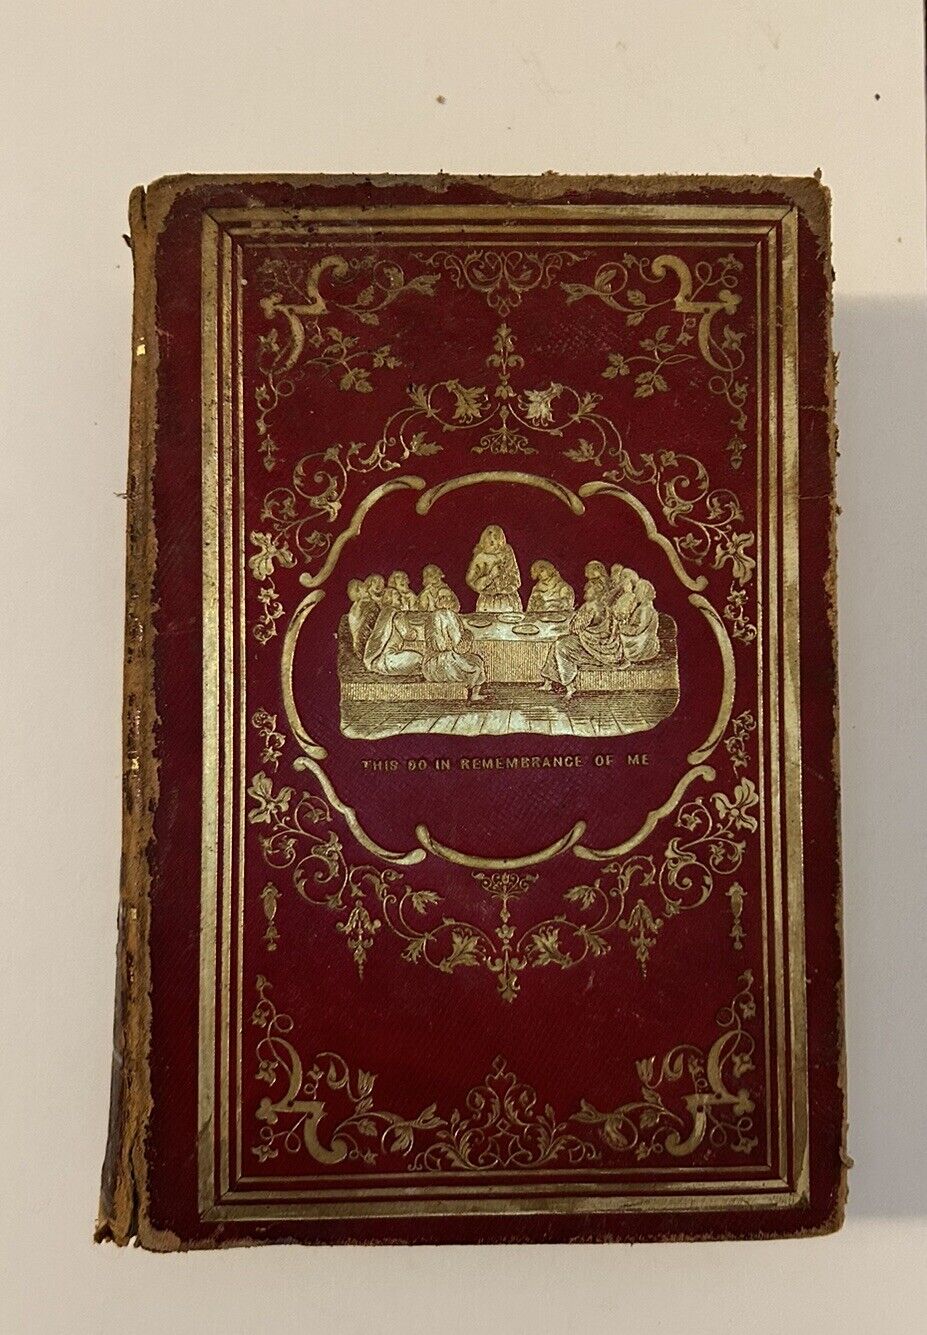 The Life of Jesus Christ Rev. Fleetwood 1855 Antique Book - Rare Print/Cover